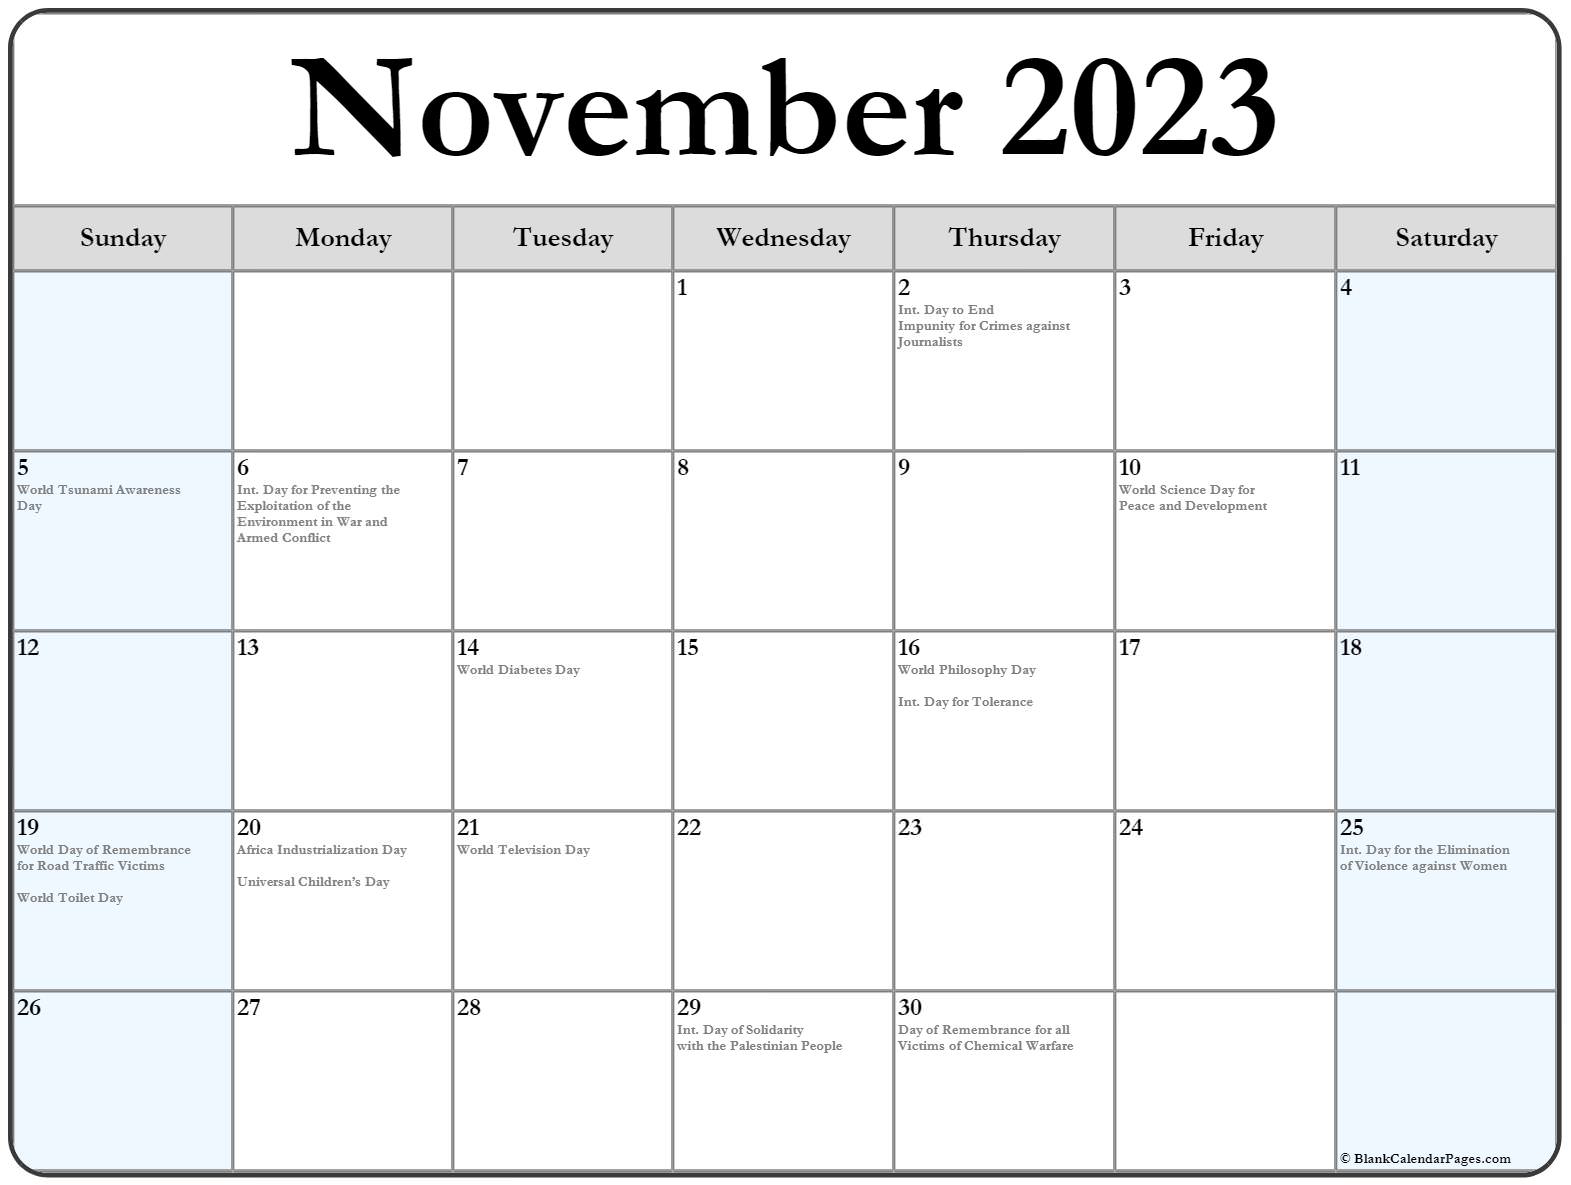 calendar-2023-holidays-and-observances-get-calendar-2023-update-inono-icu